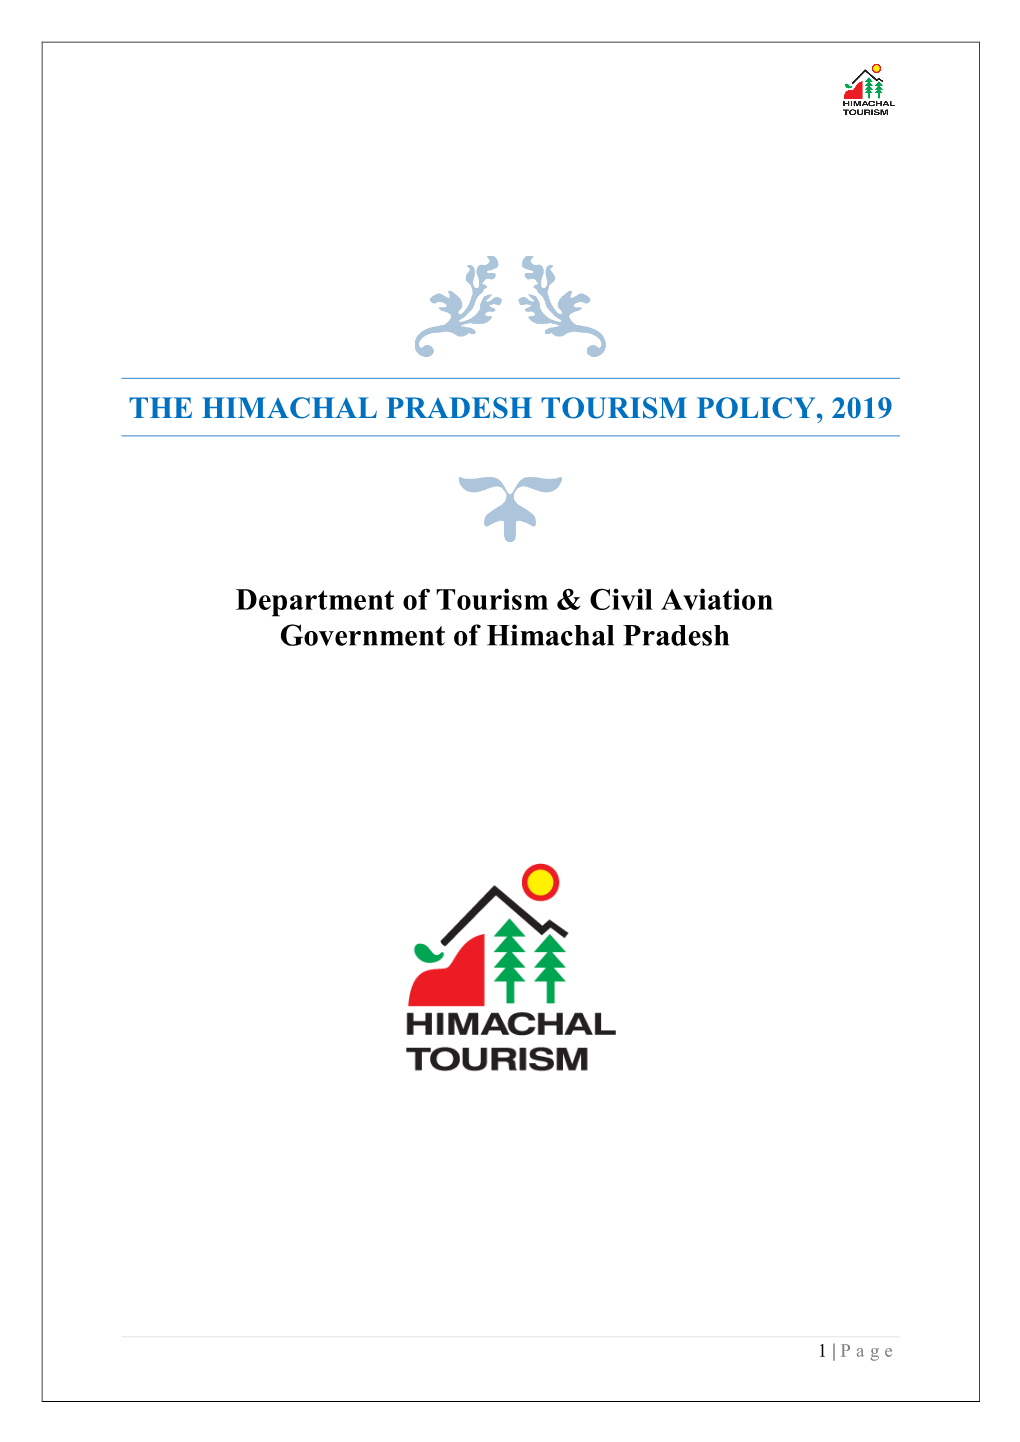 The Himachal Pradesh Tourism Policy, 2019